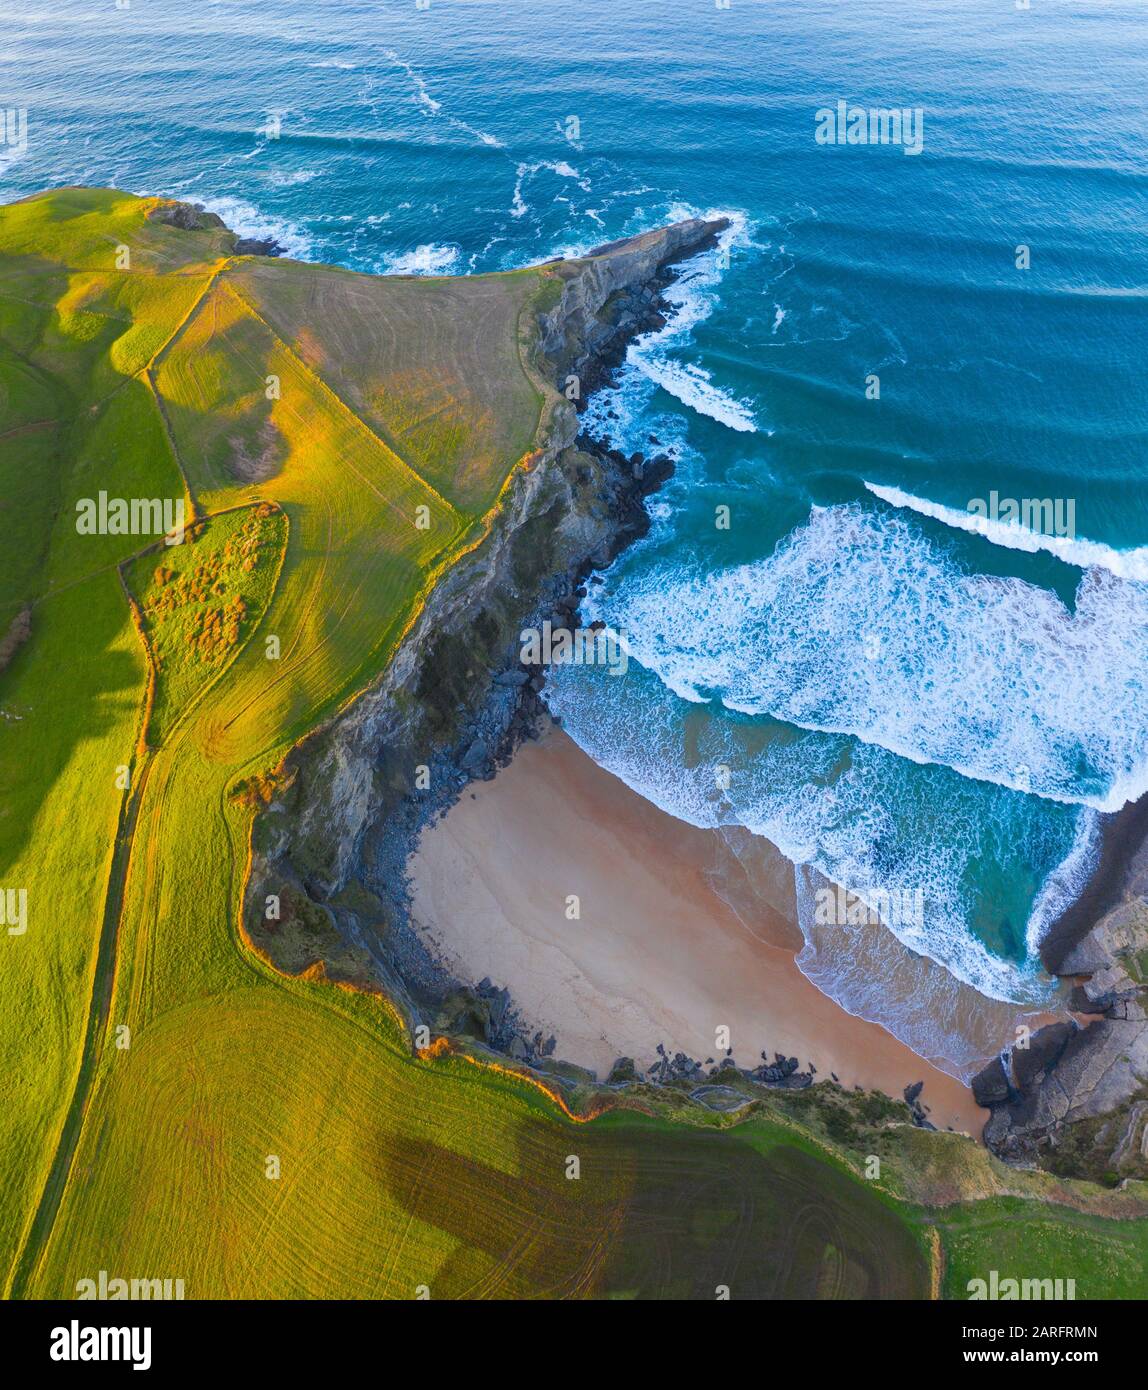 Vista aérea de la playa de Antuerta, Ajo, municipio de Bareyo, Costa de Trasmiera. Cantábrico, Cantabria, España, Europa. Foto de stock